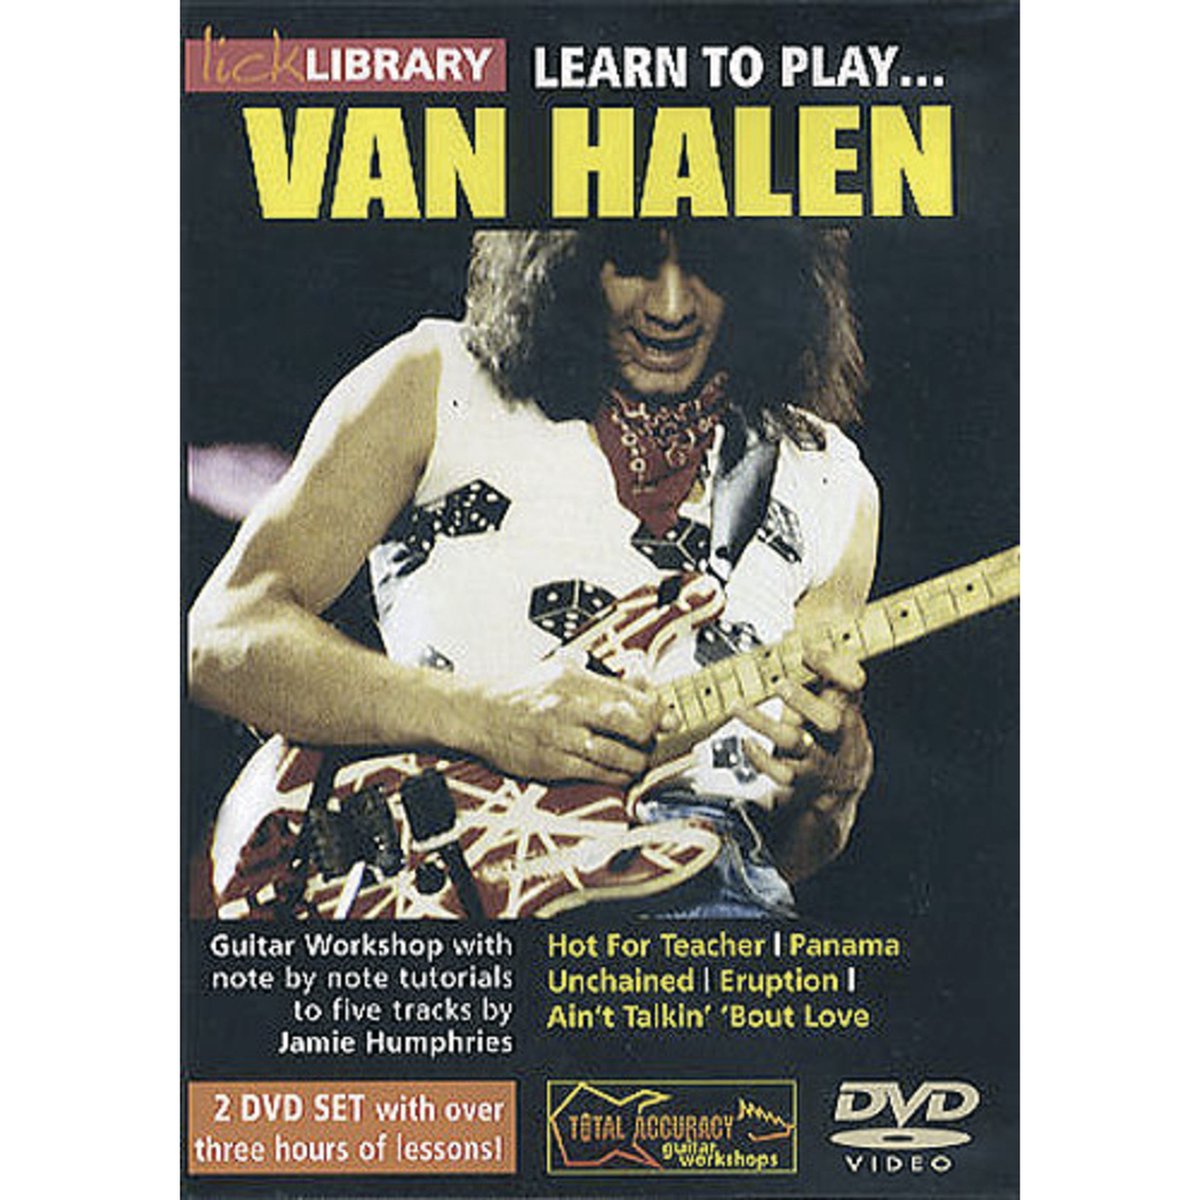 Roadrock International Lick Library - Van Halen Learn to play (gitaar), DVD - DVD / CD / Multimedia: Q - Z